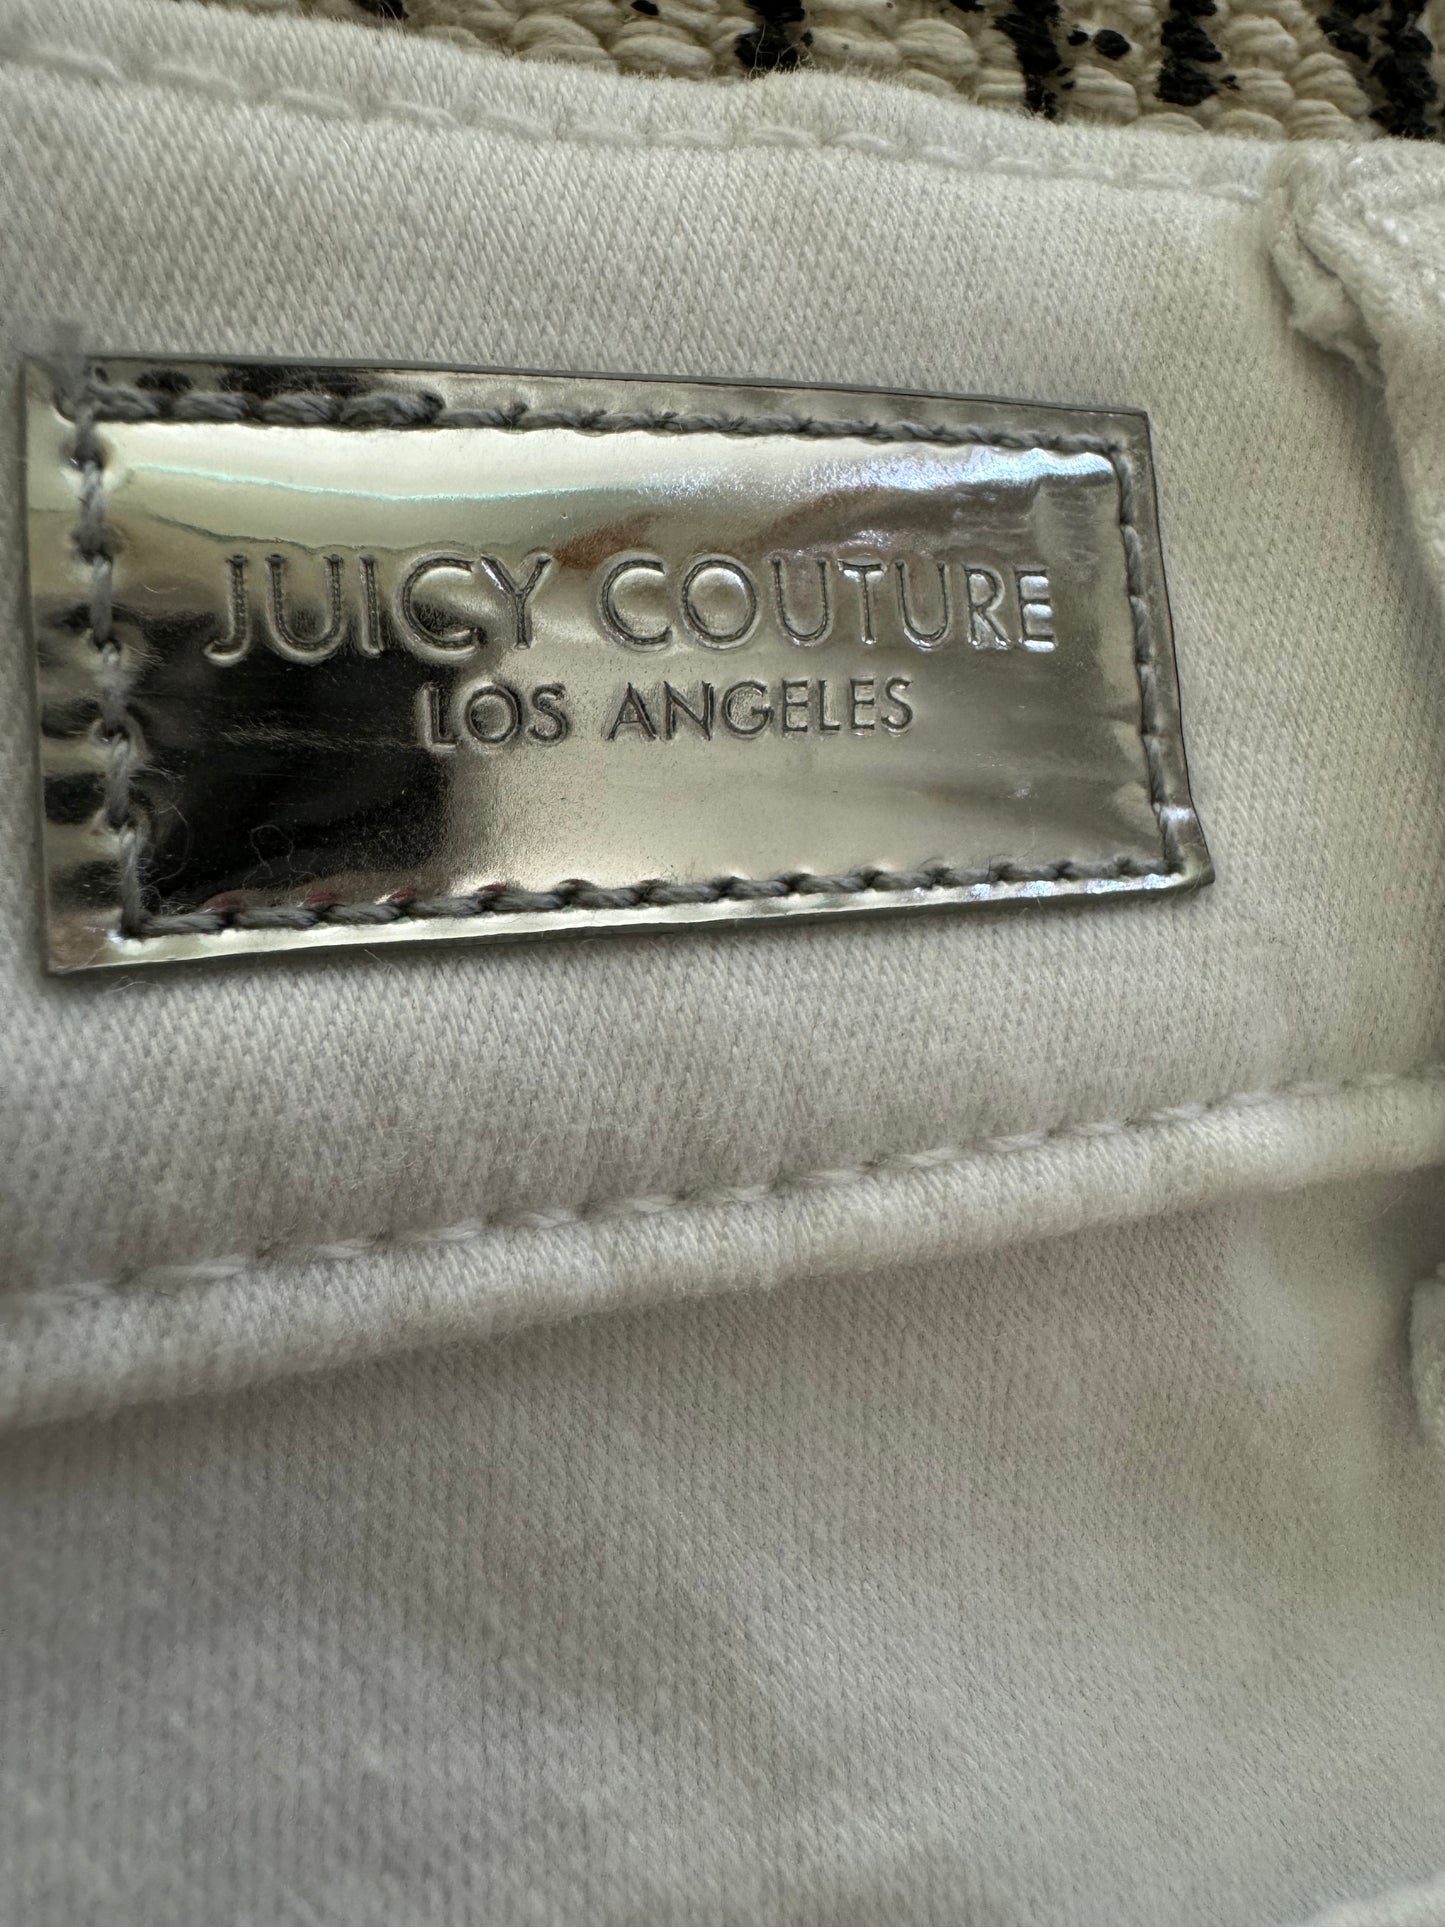 Juicy Couture Los Angeles-California